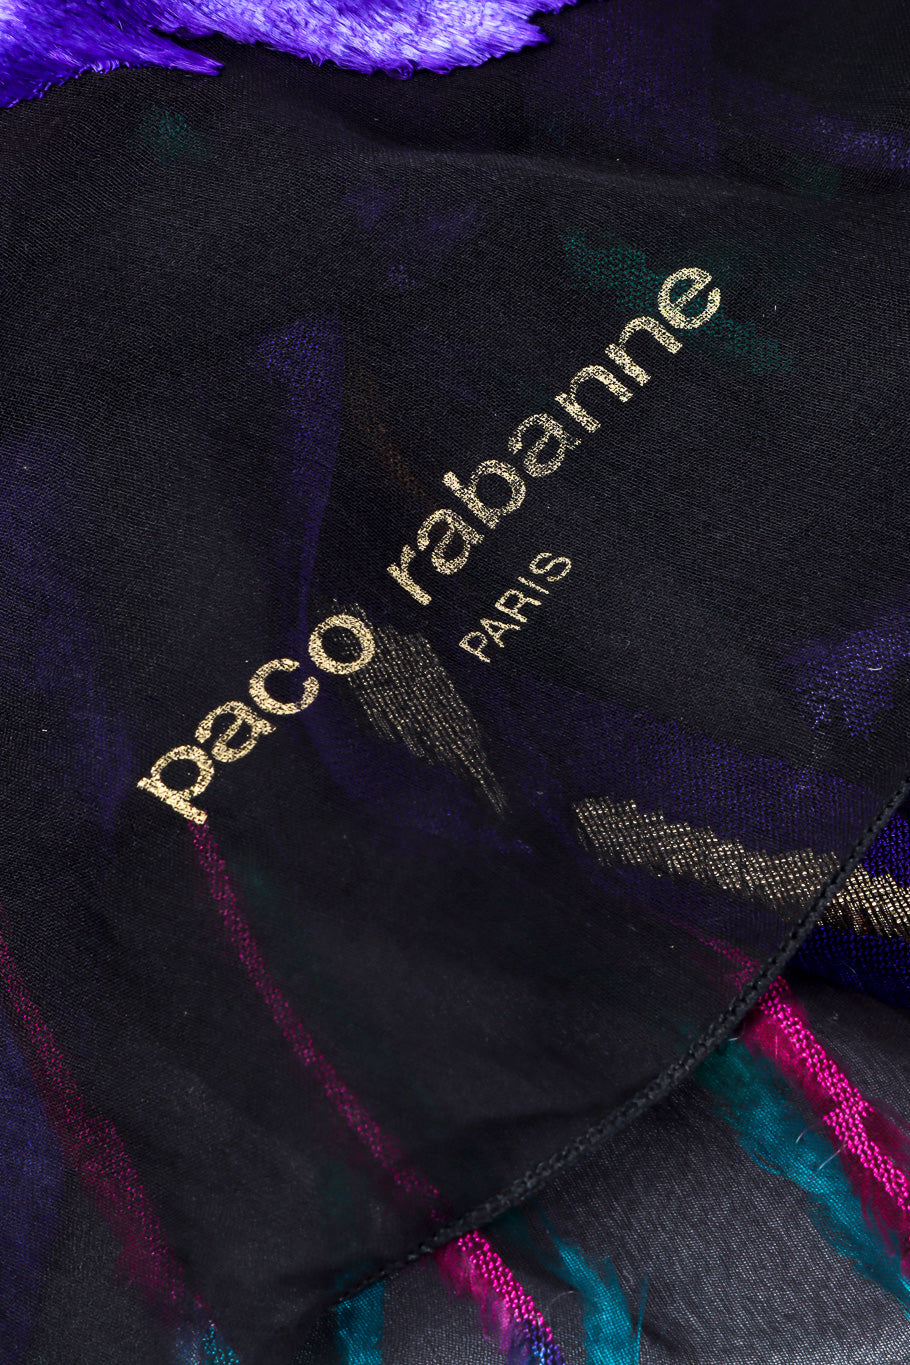 Jewel tone velvet scarf by Paco Rabanne signature label @recessla